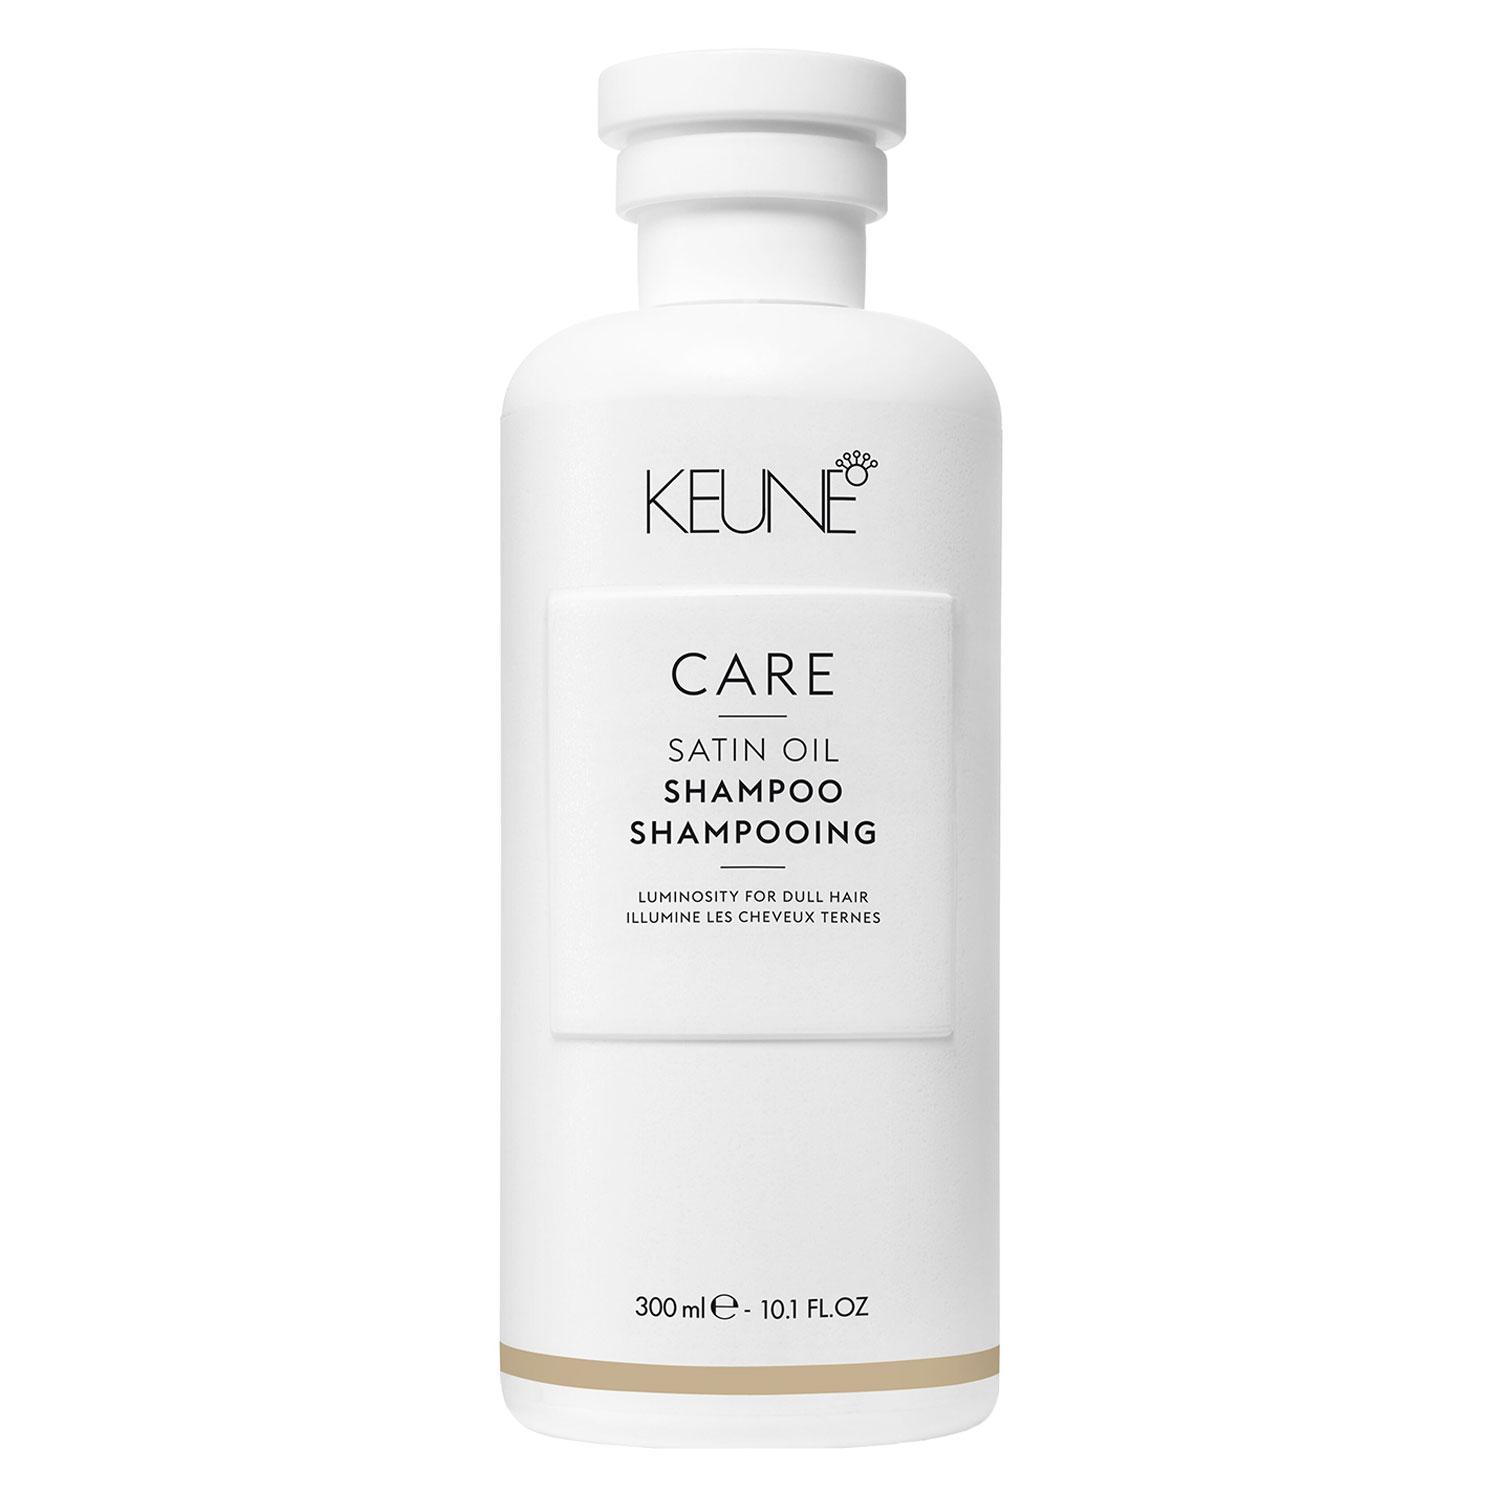 Keune Care - Satin Oil Shampoo